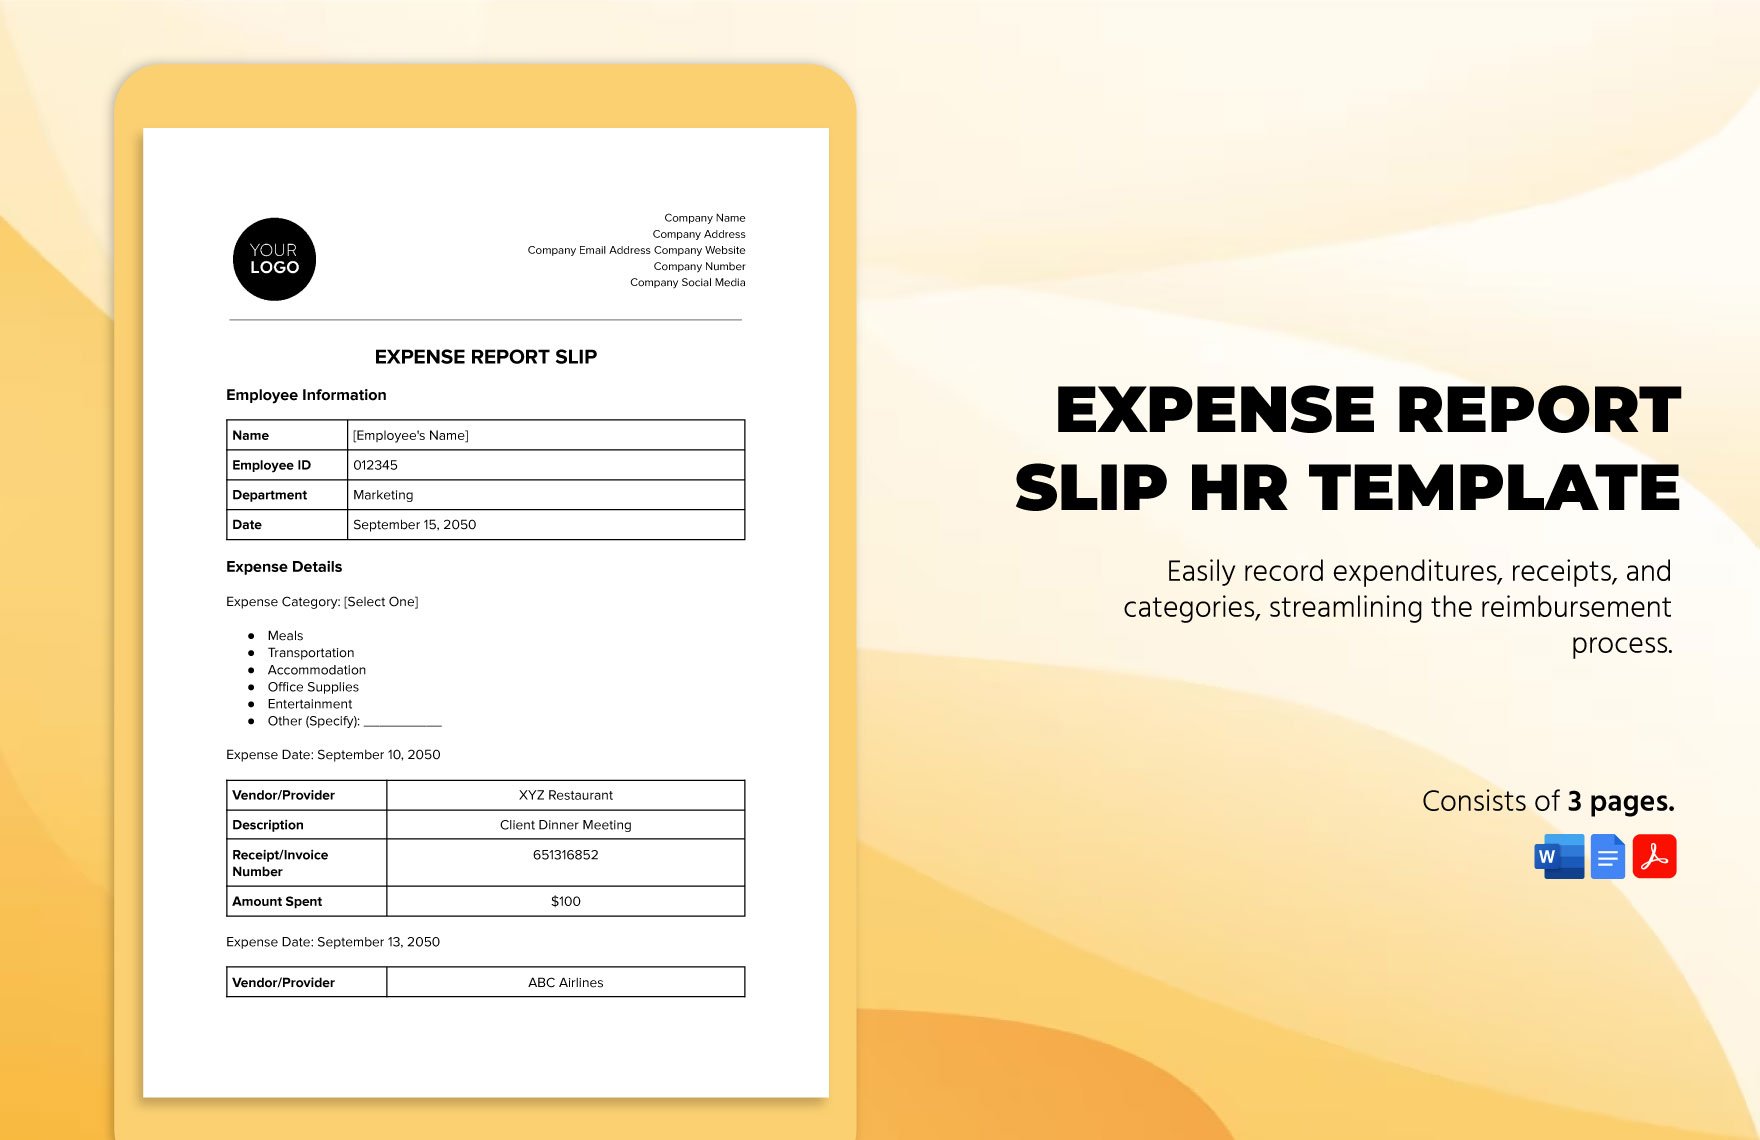 Expense Report Slip HR Template